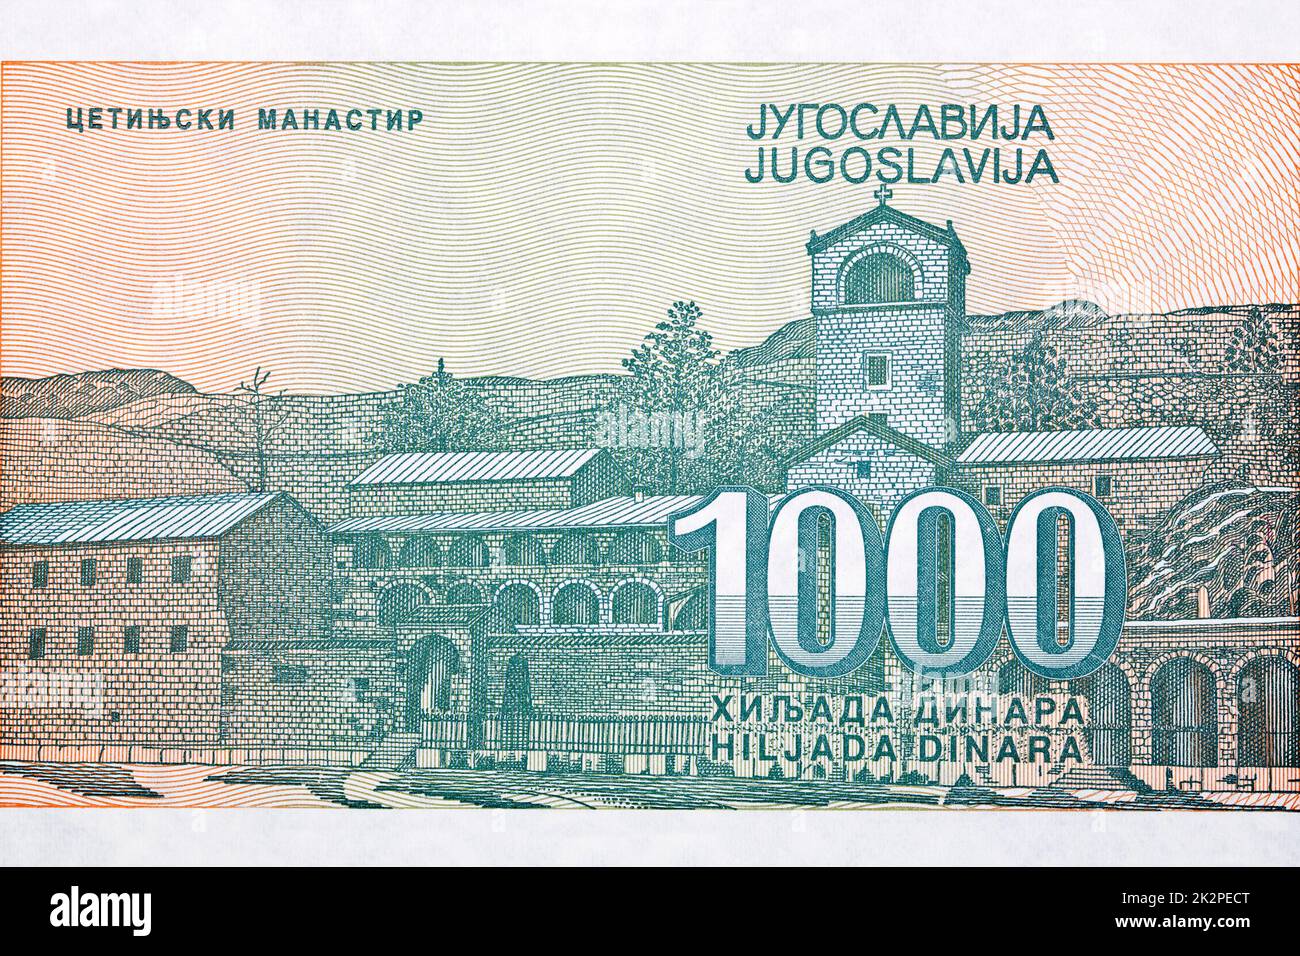 Cetinje monastery from Yugoslav money Stock Photo